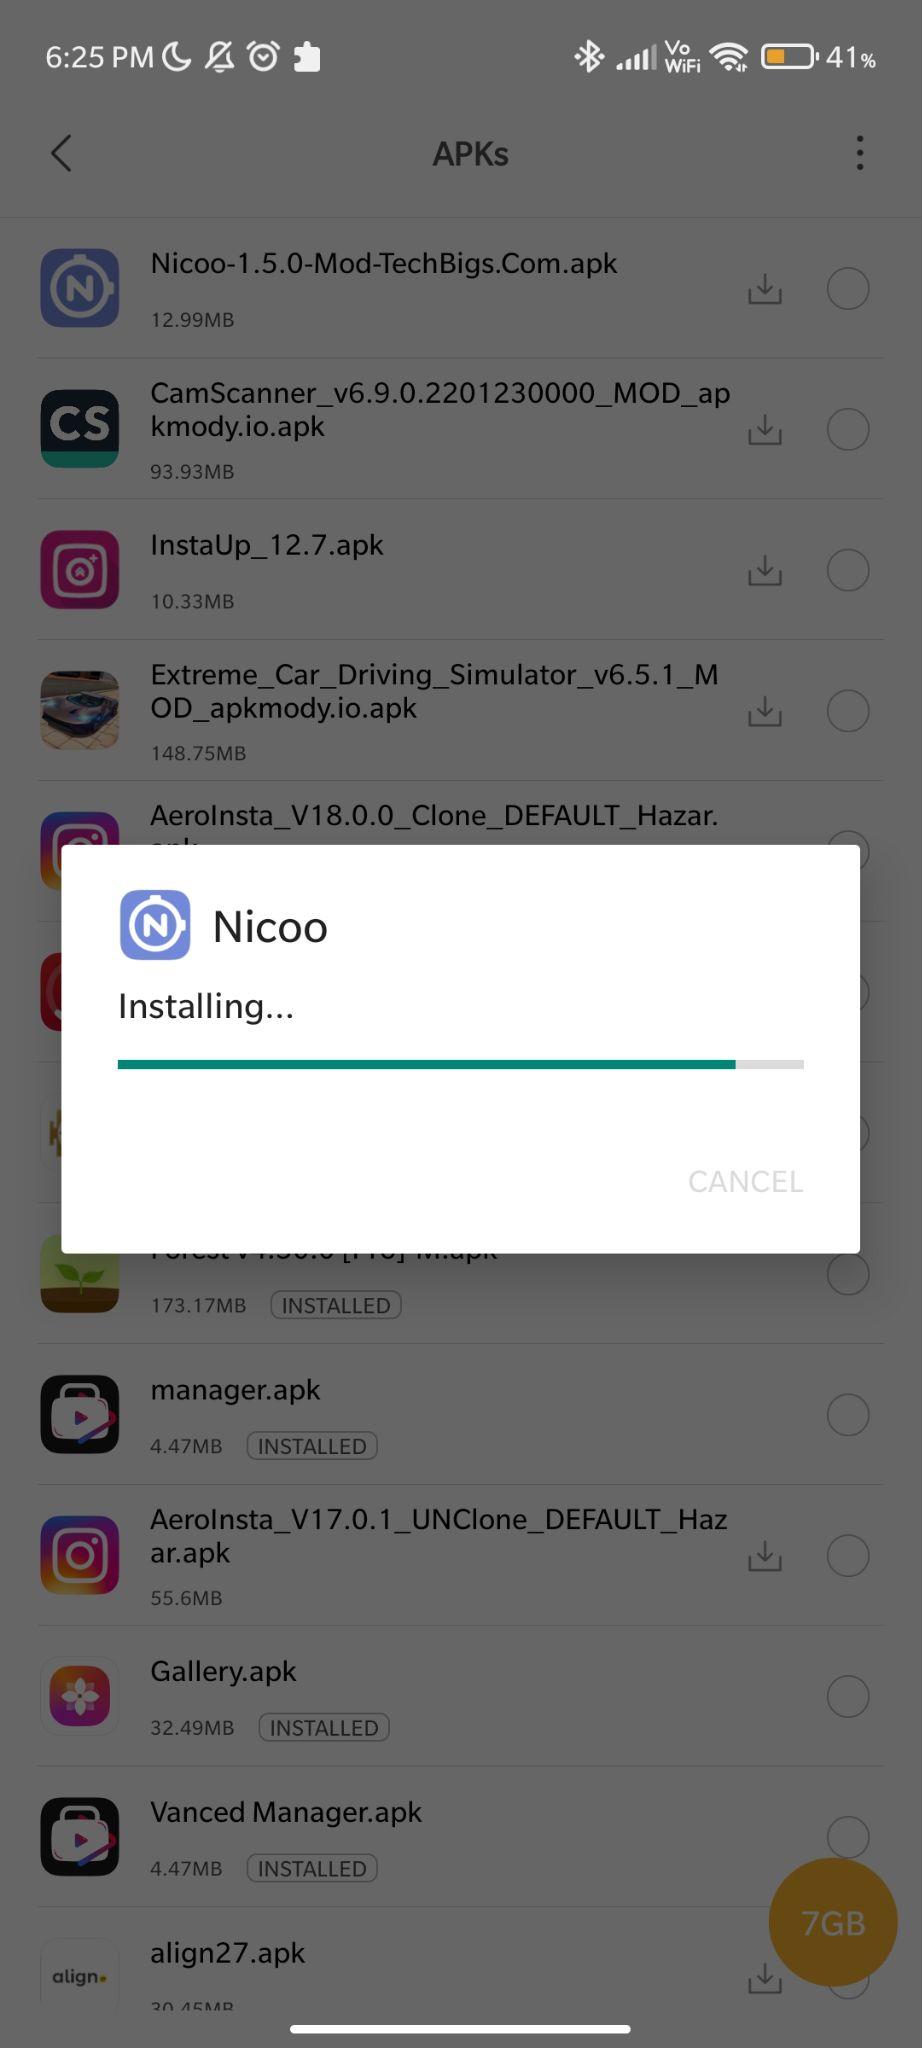 nicoo apk installing